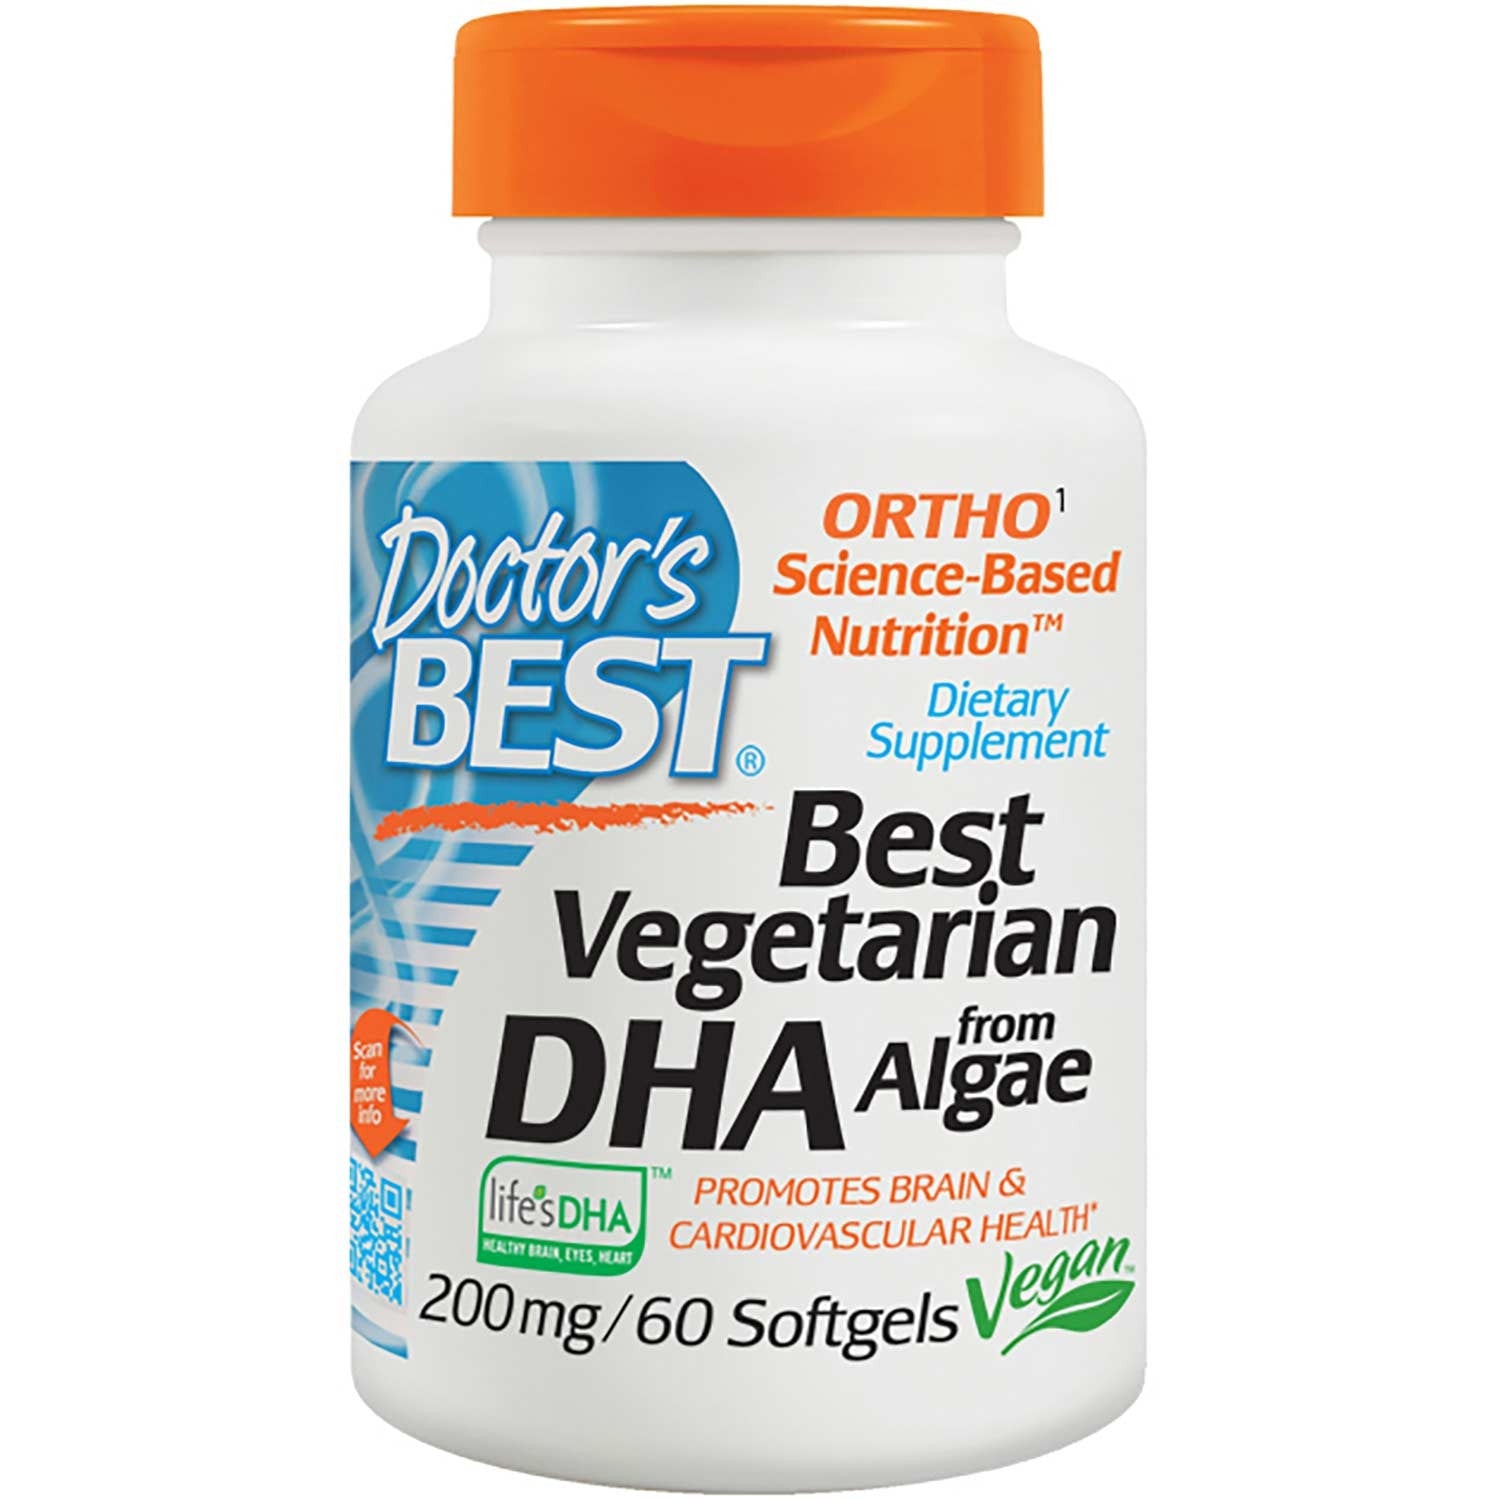 Doctor's Best Best Vegetarian DHA from Algae 200mg, 60 sgls